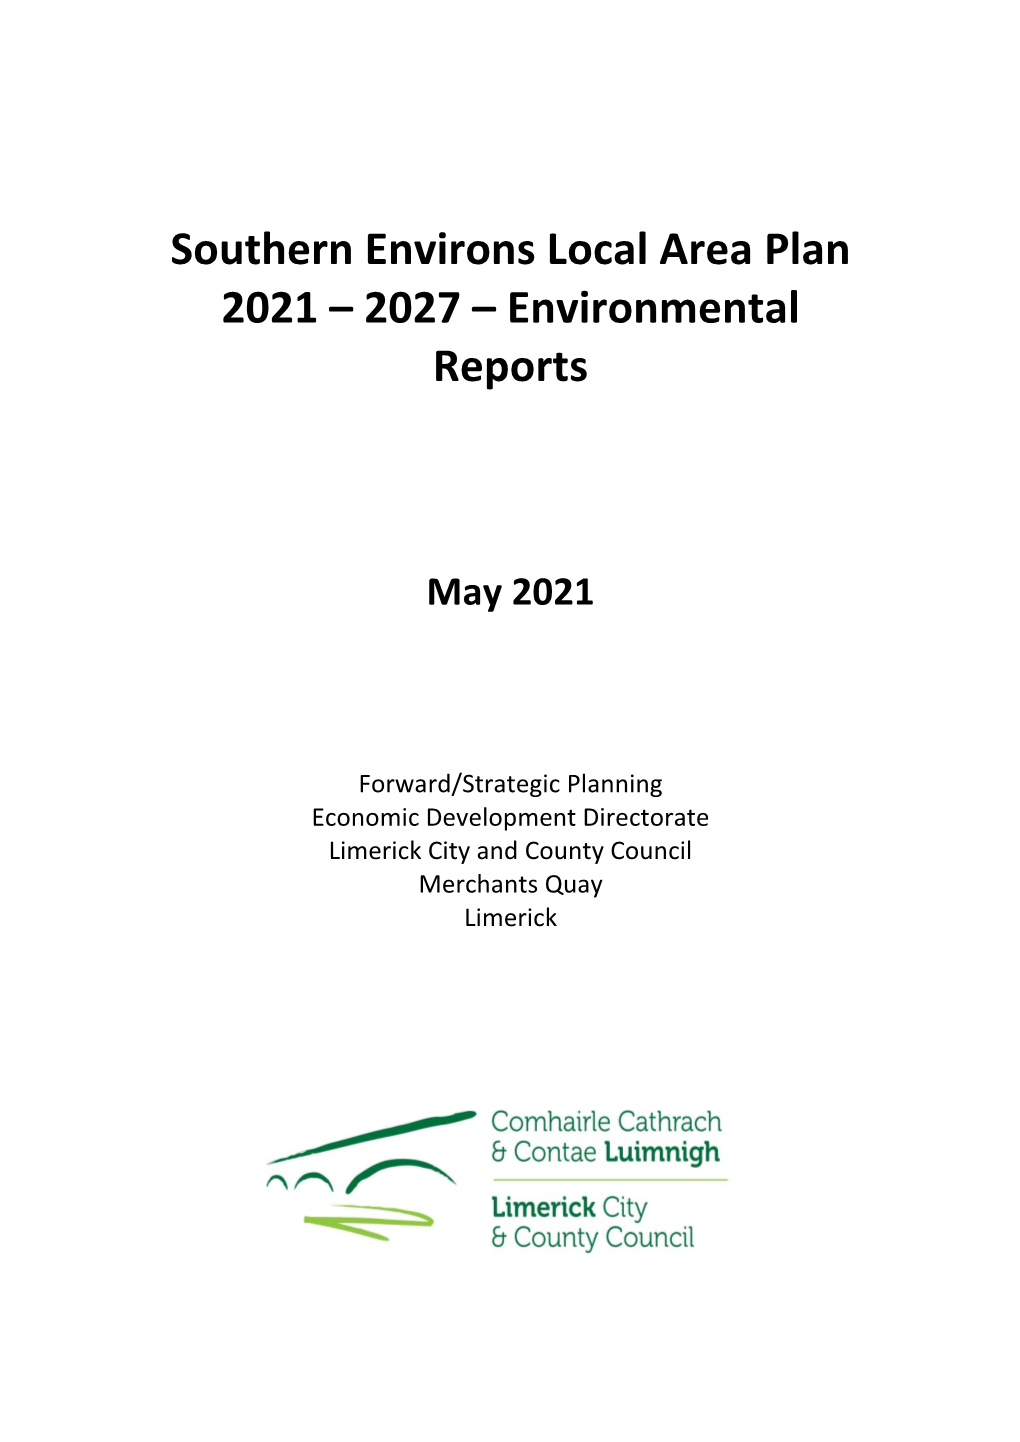 Southern Environs Local Area Plan Environmental Reports May 2021